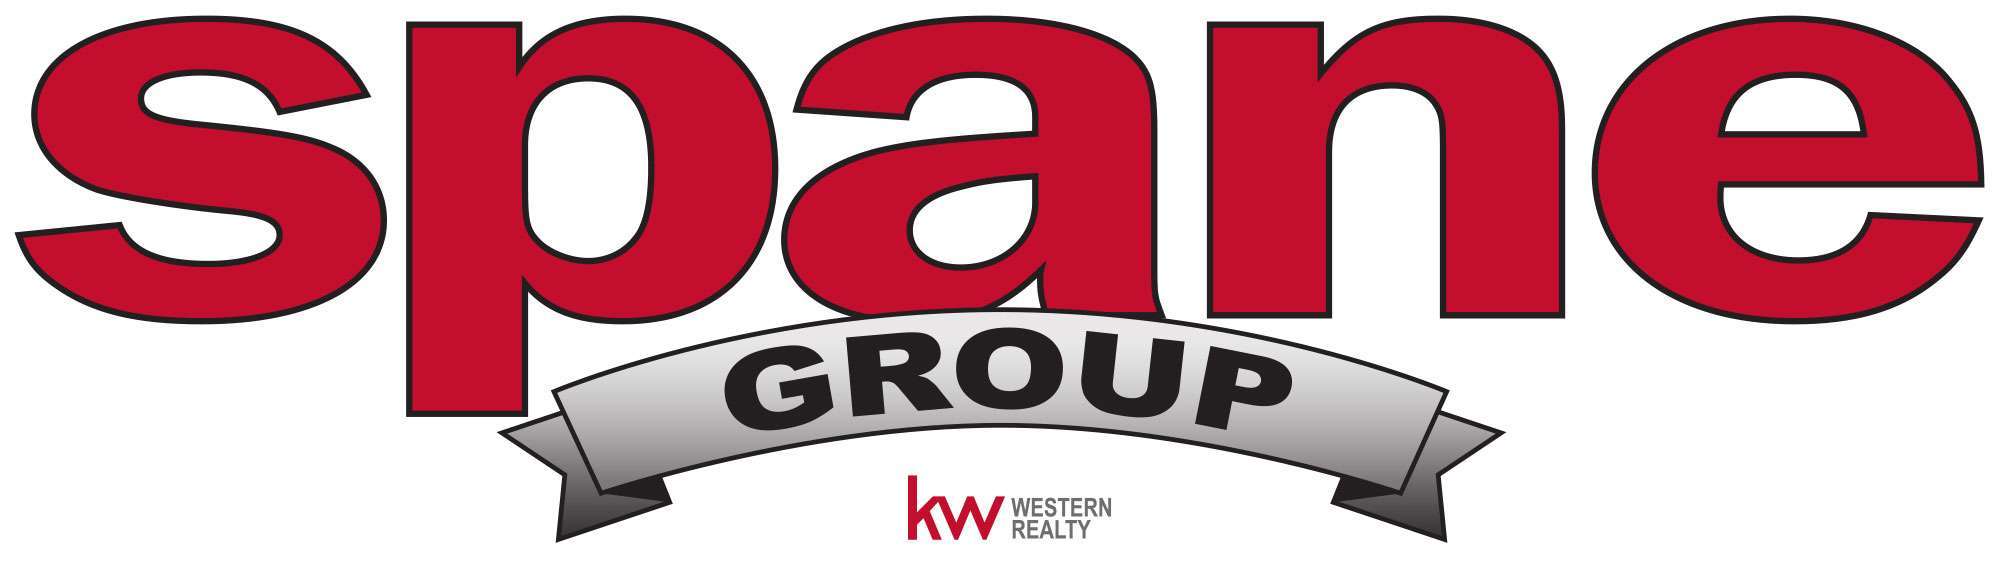 spane group logo